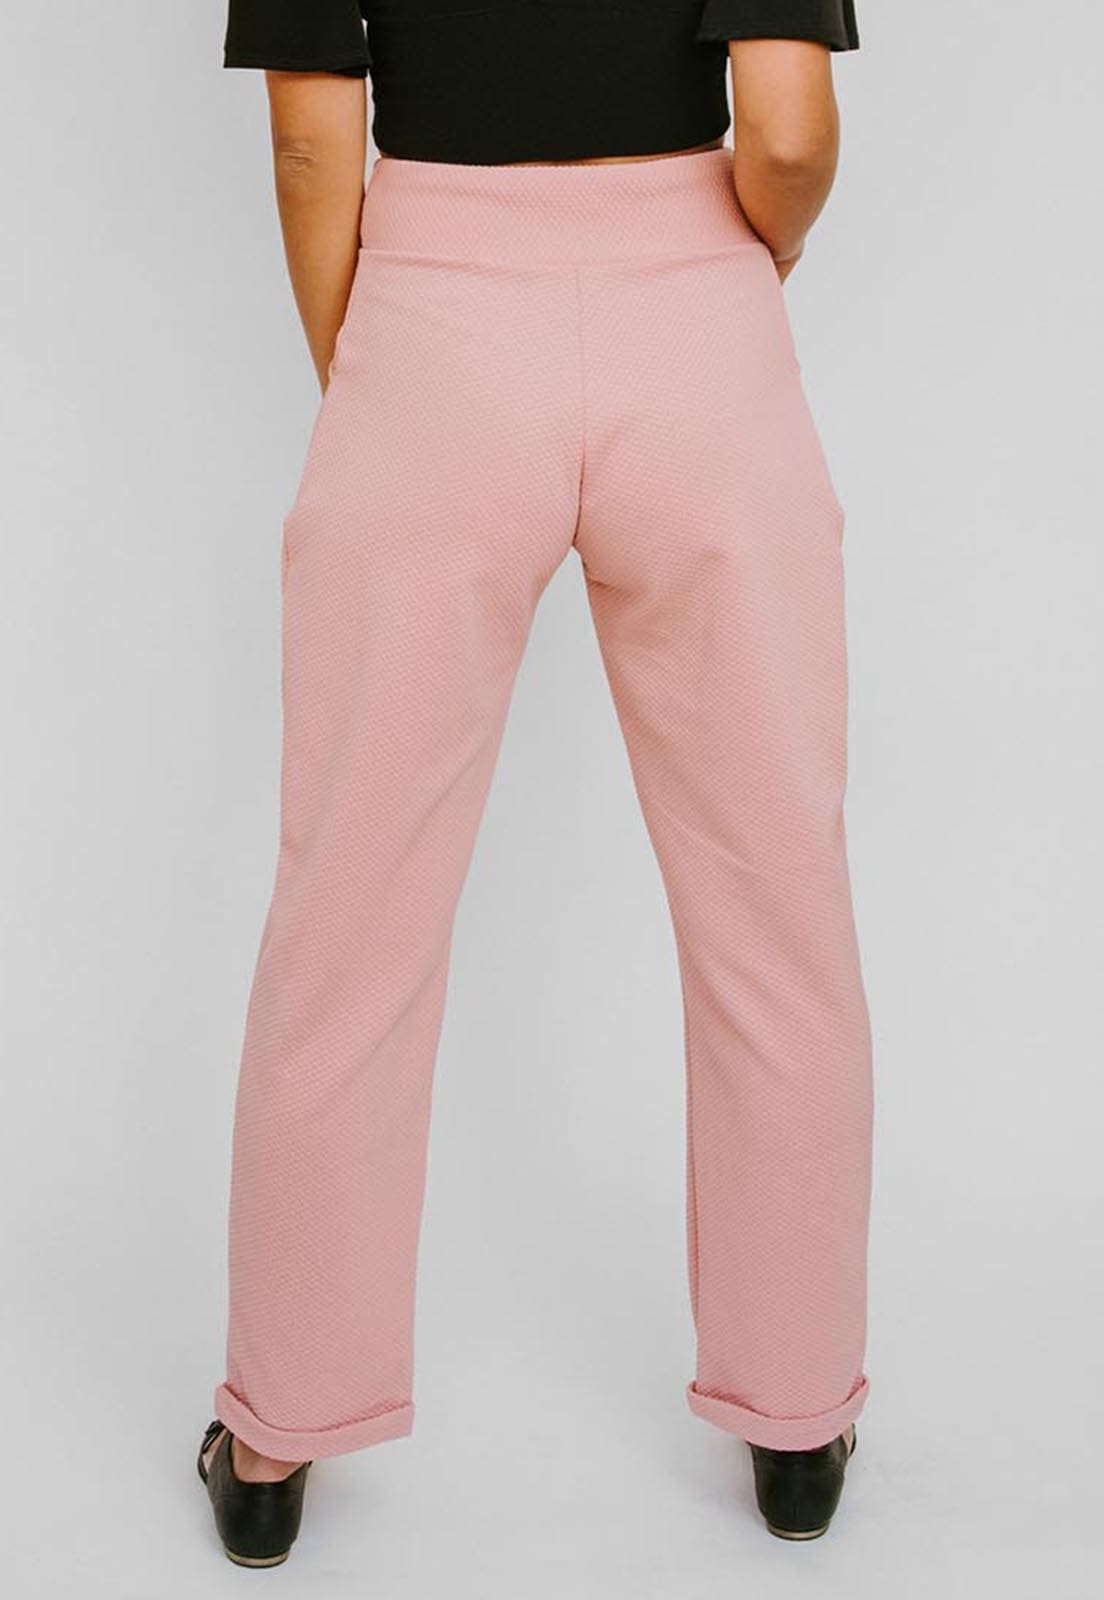 pantalon lucia rosa espalda